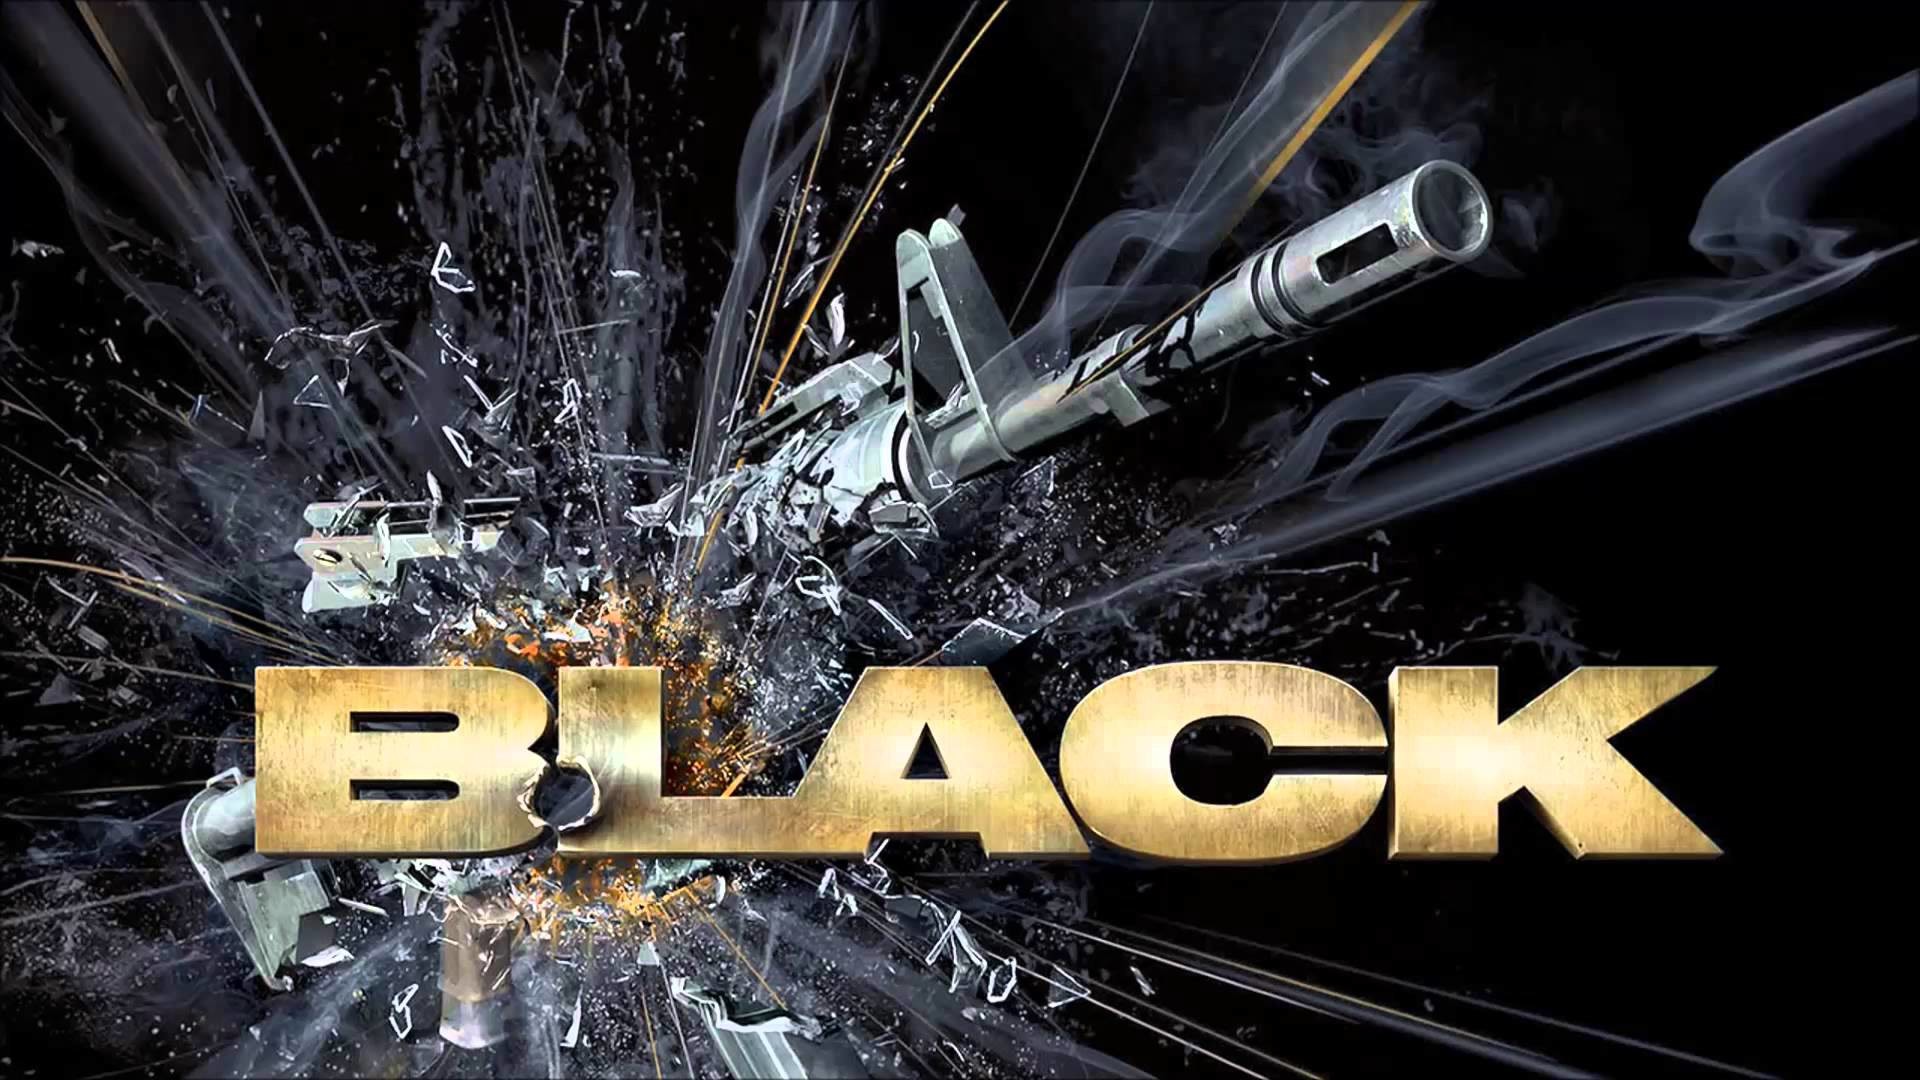 Black (Video Game) Menu Theme Full HD